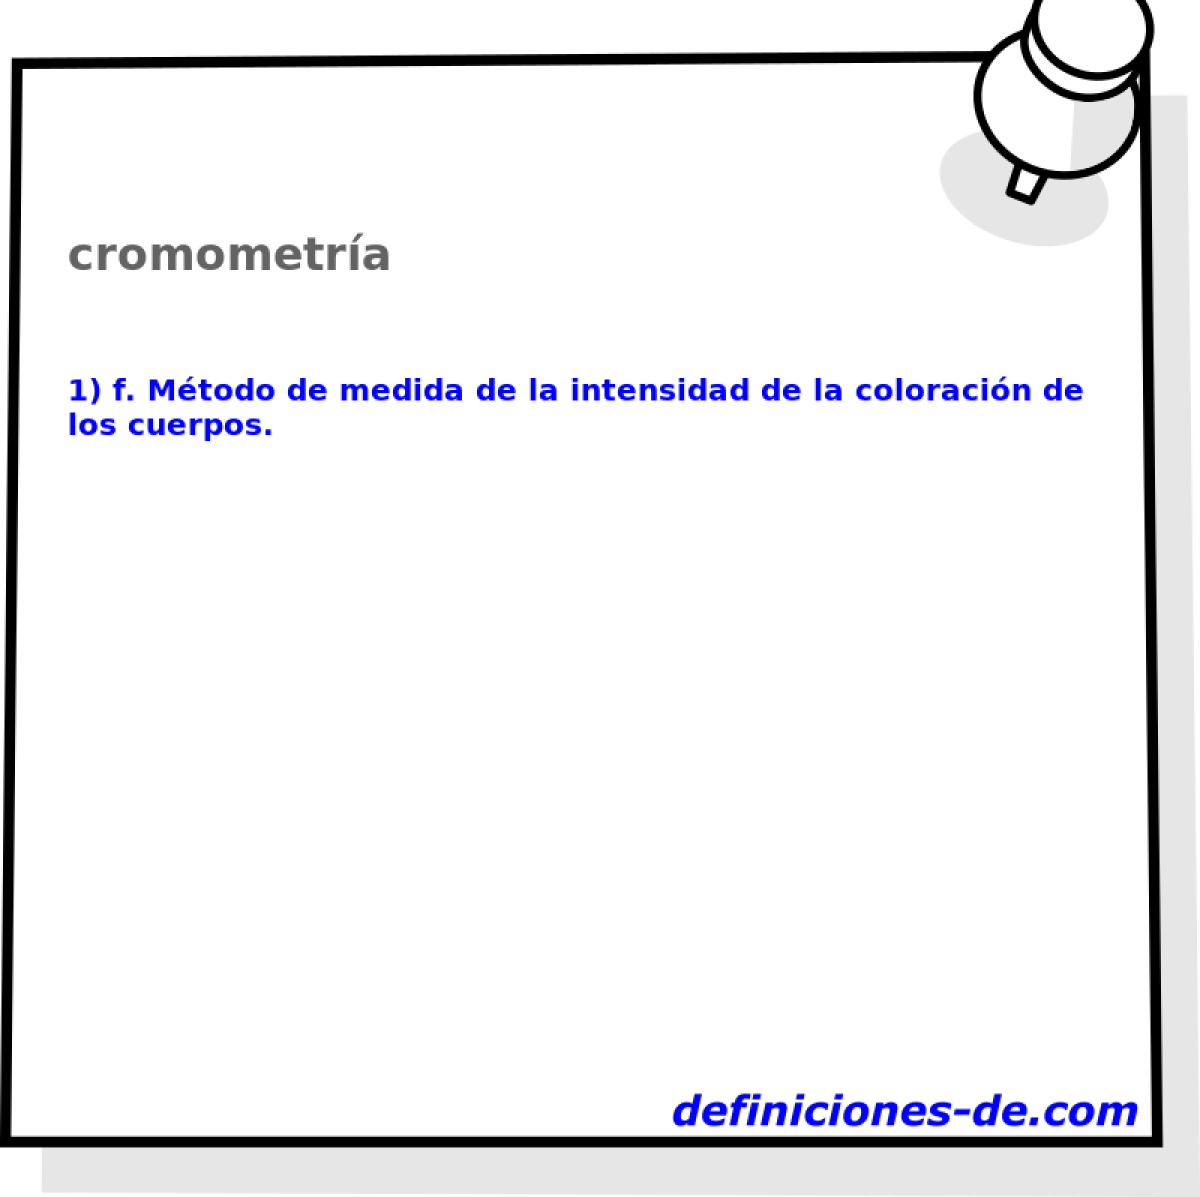 cromometra 